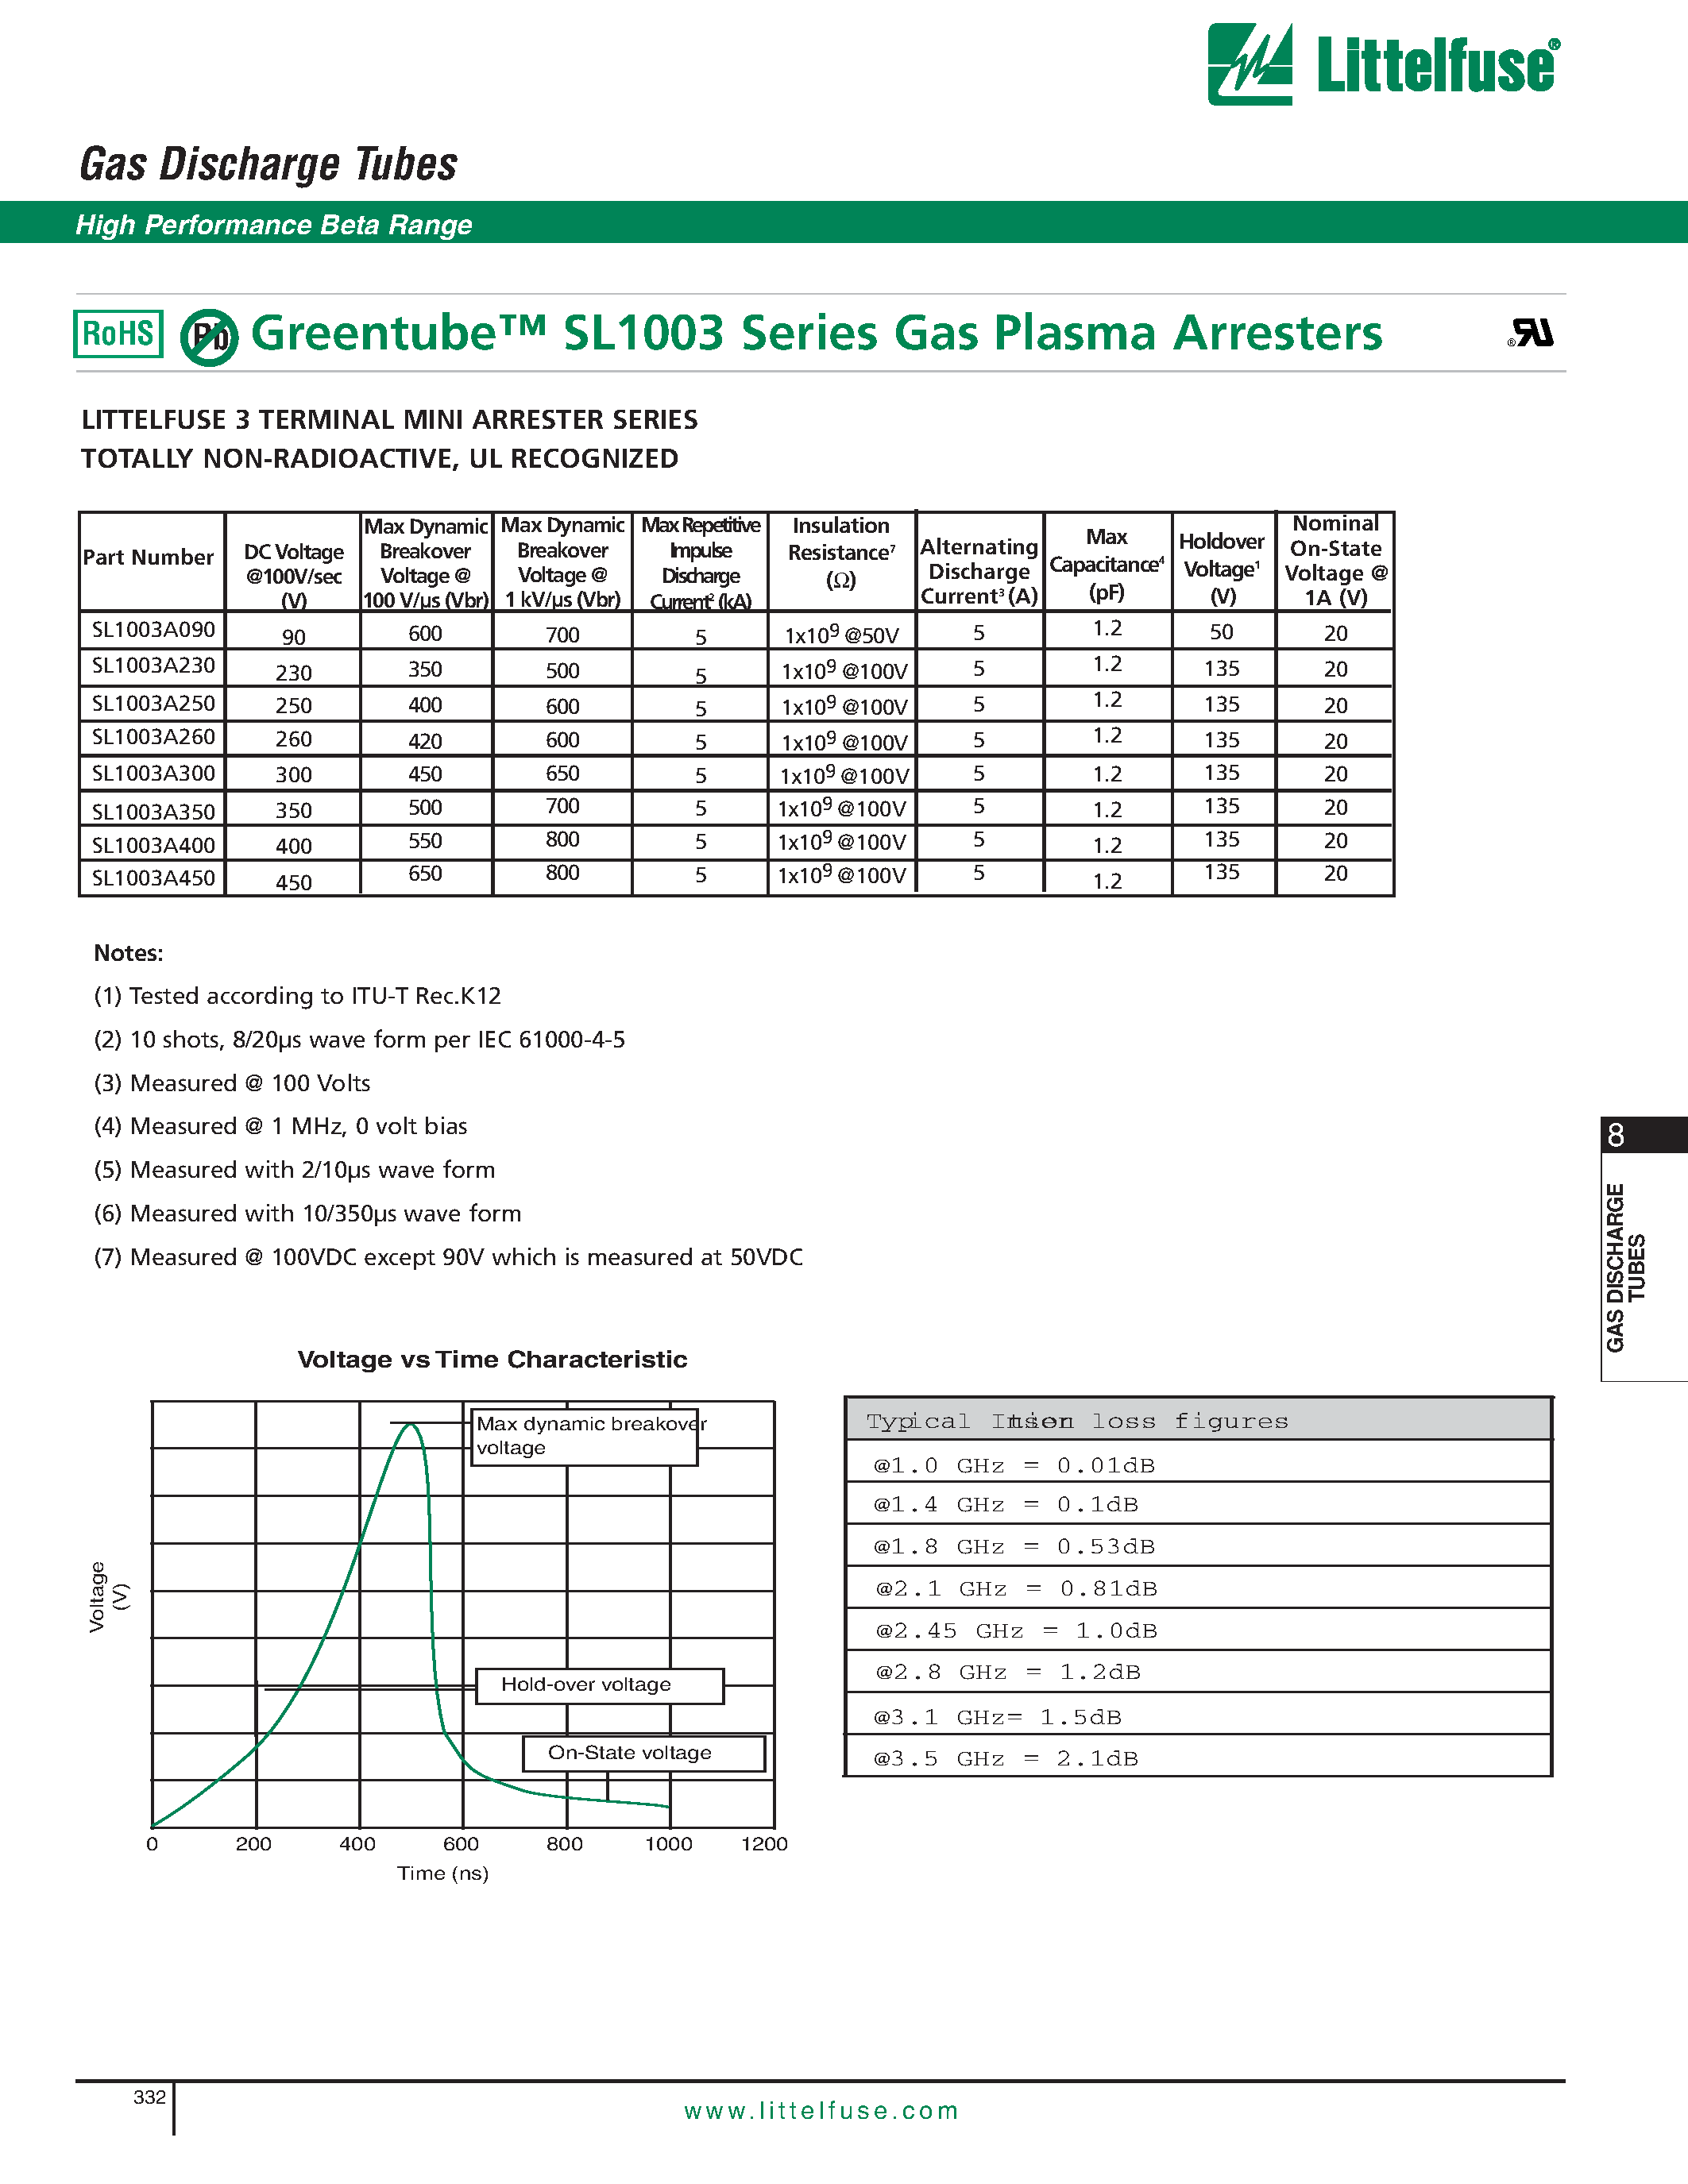 Даташит SL1003A350 - Greentube SL1003 Series Gas Plasma Arresters страница 2